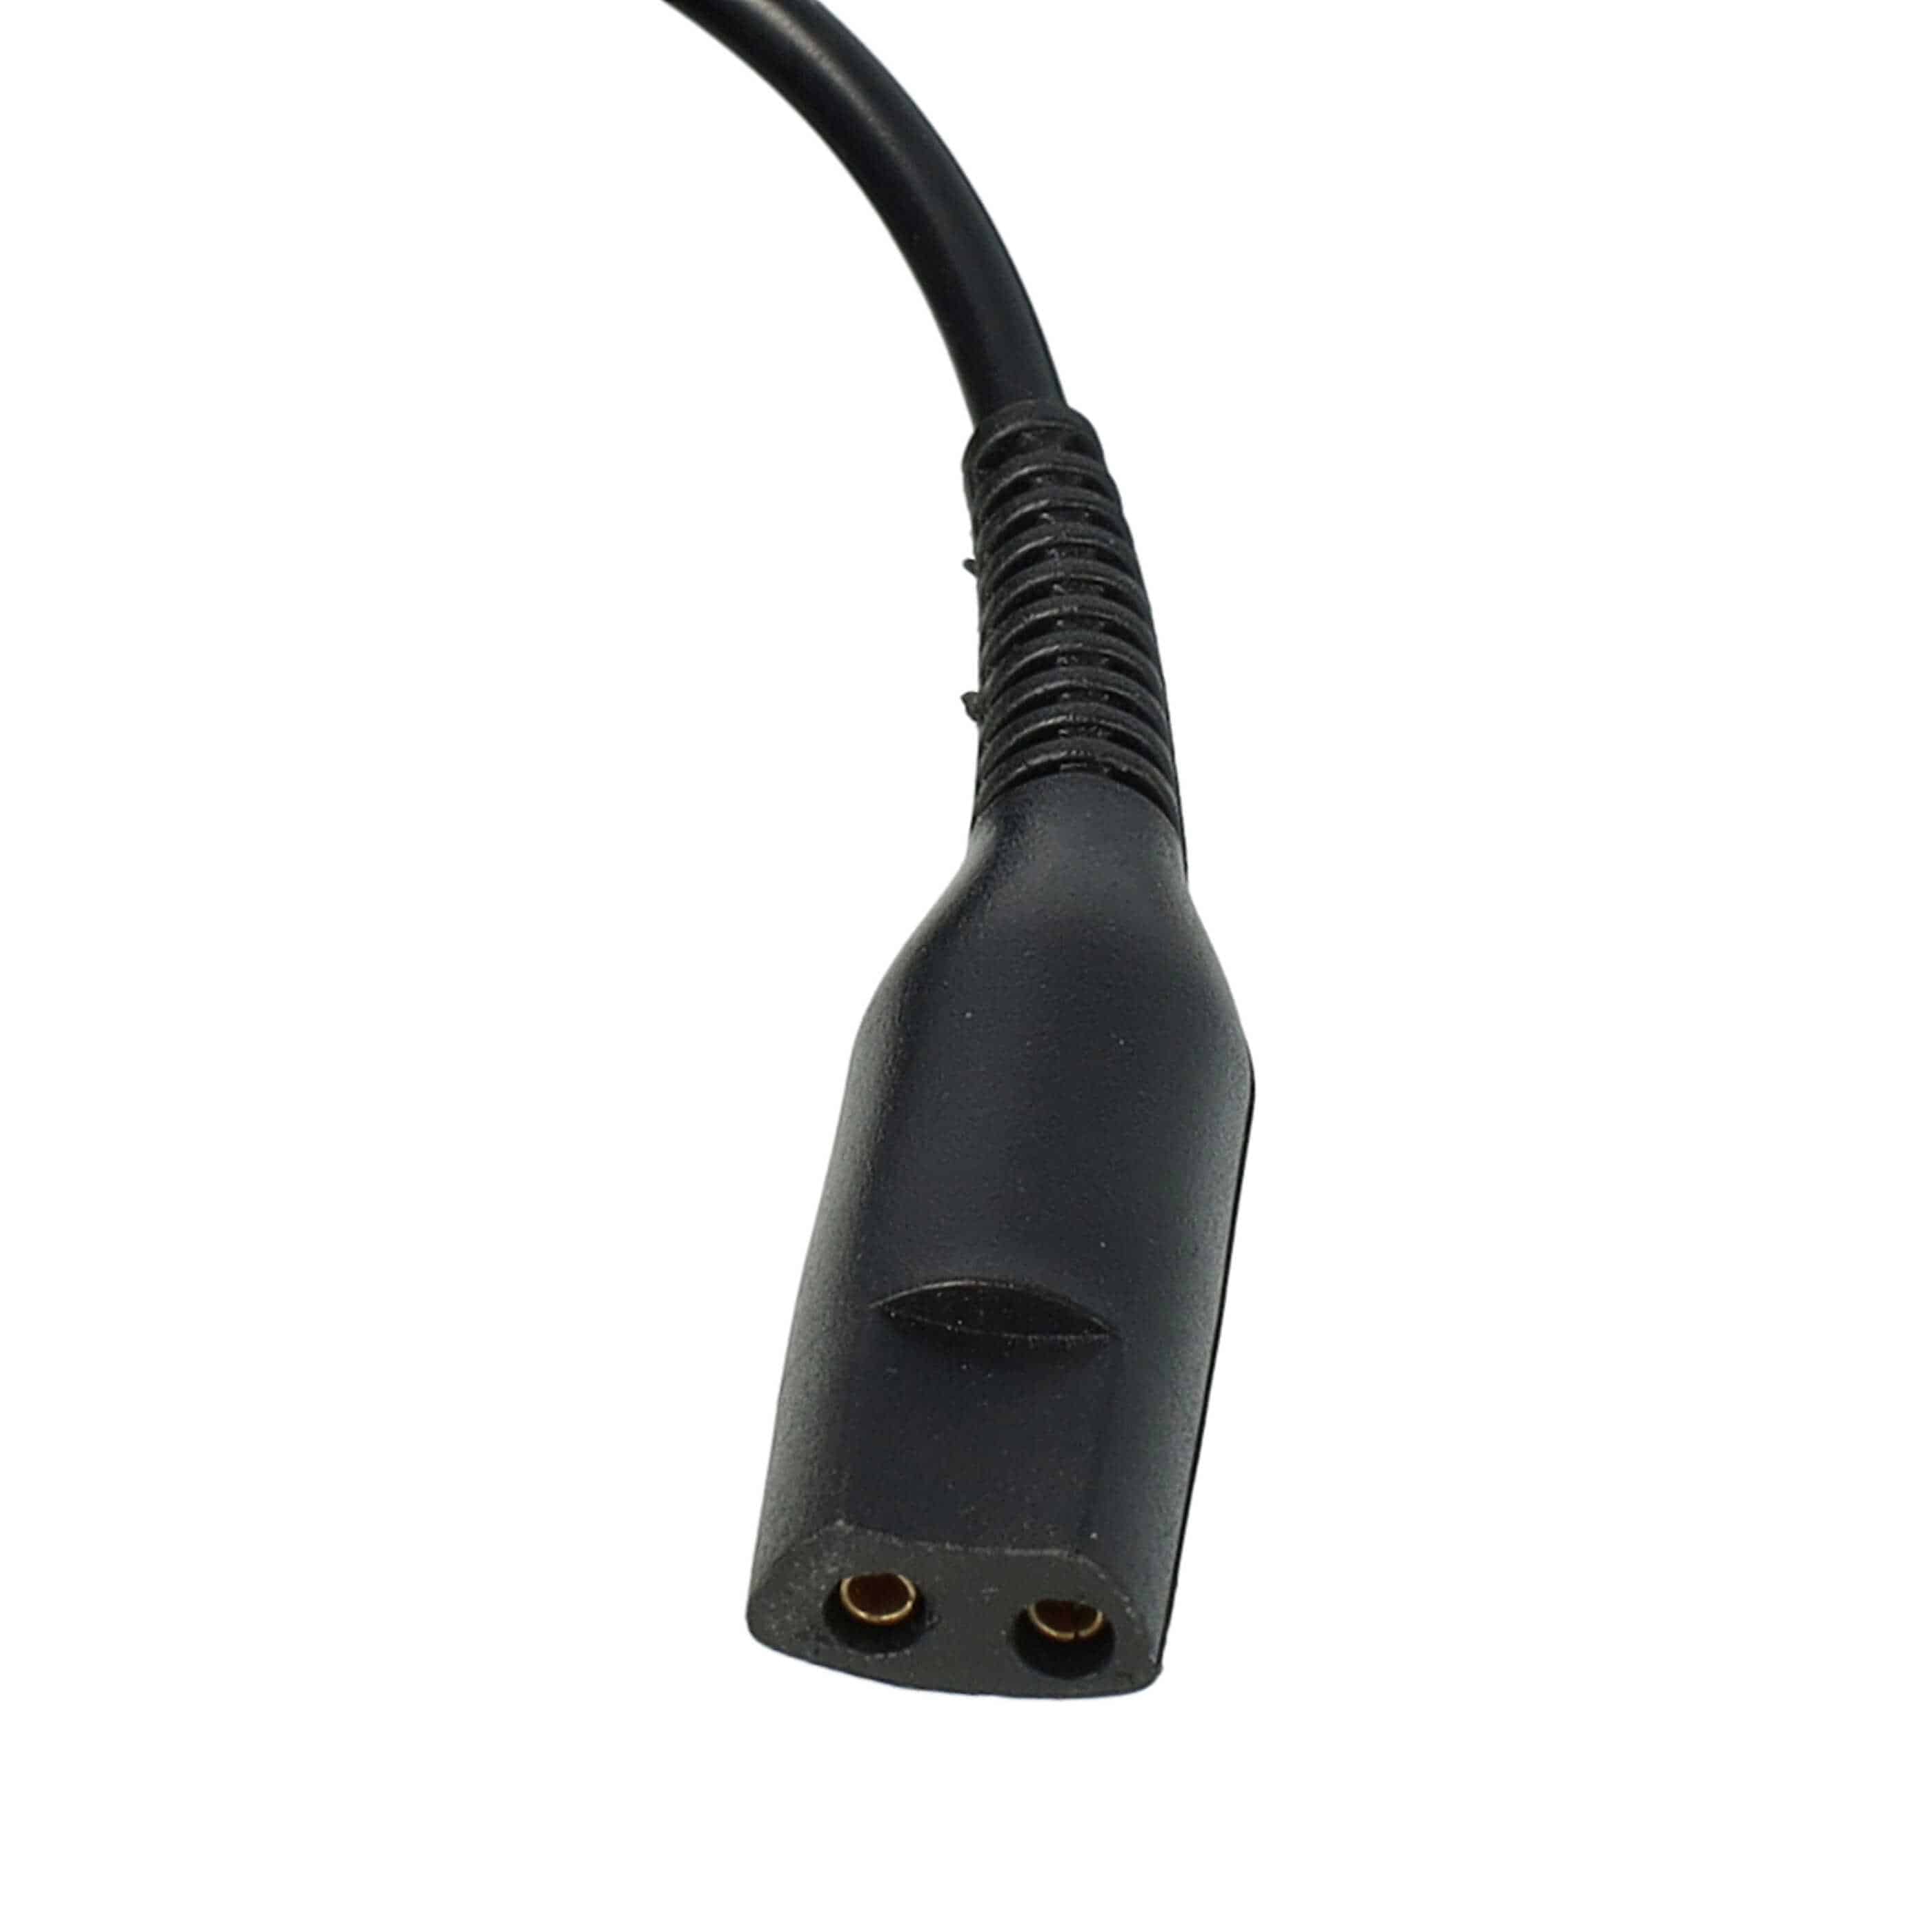 Caricabatterie USB sostituisce Braun 491-5691, 81615618, 8161561, 81747675 per rasoio Braun - 120 cm